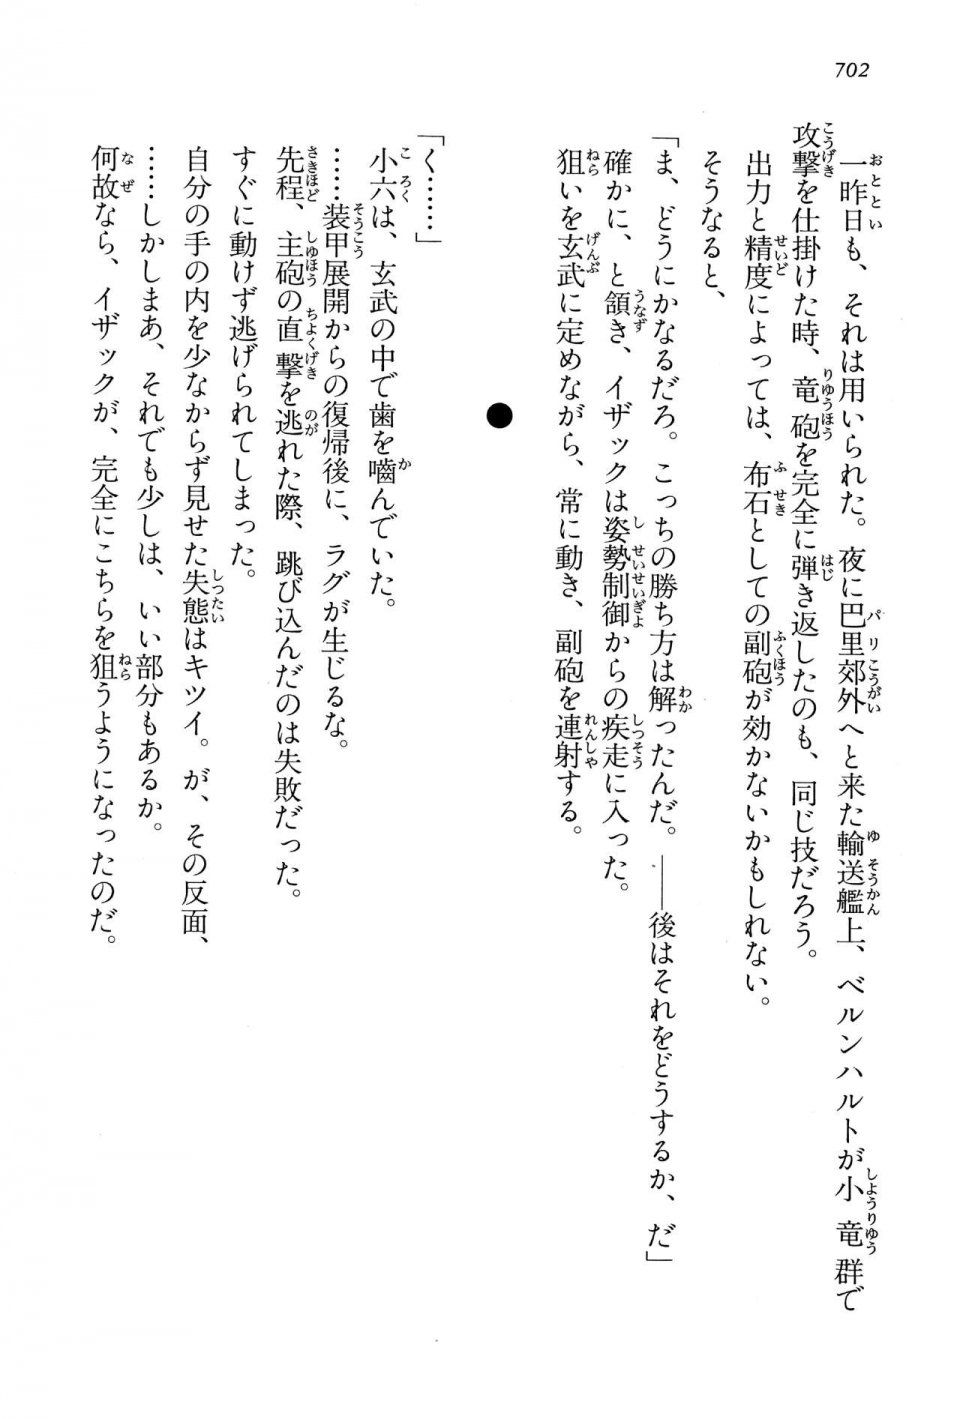 Kyoukai Senjou no Horizon LN Vol 15(6C) Part 2 - Photo #172